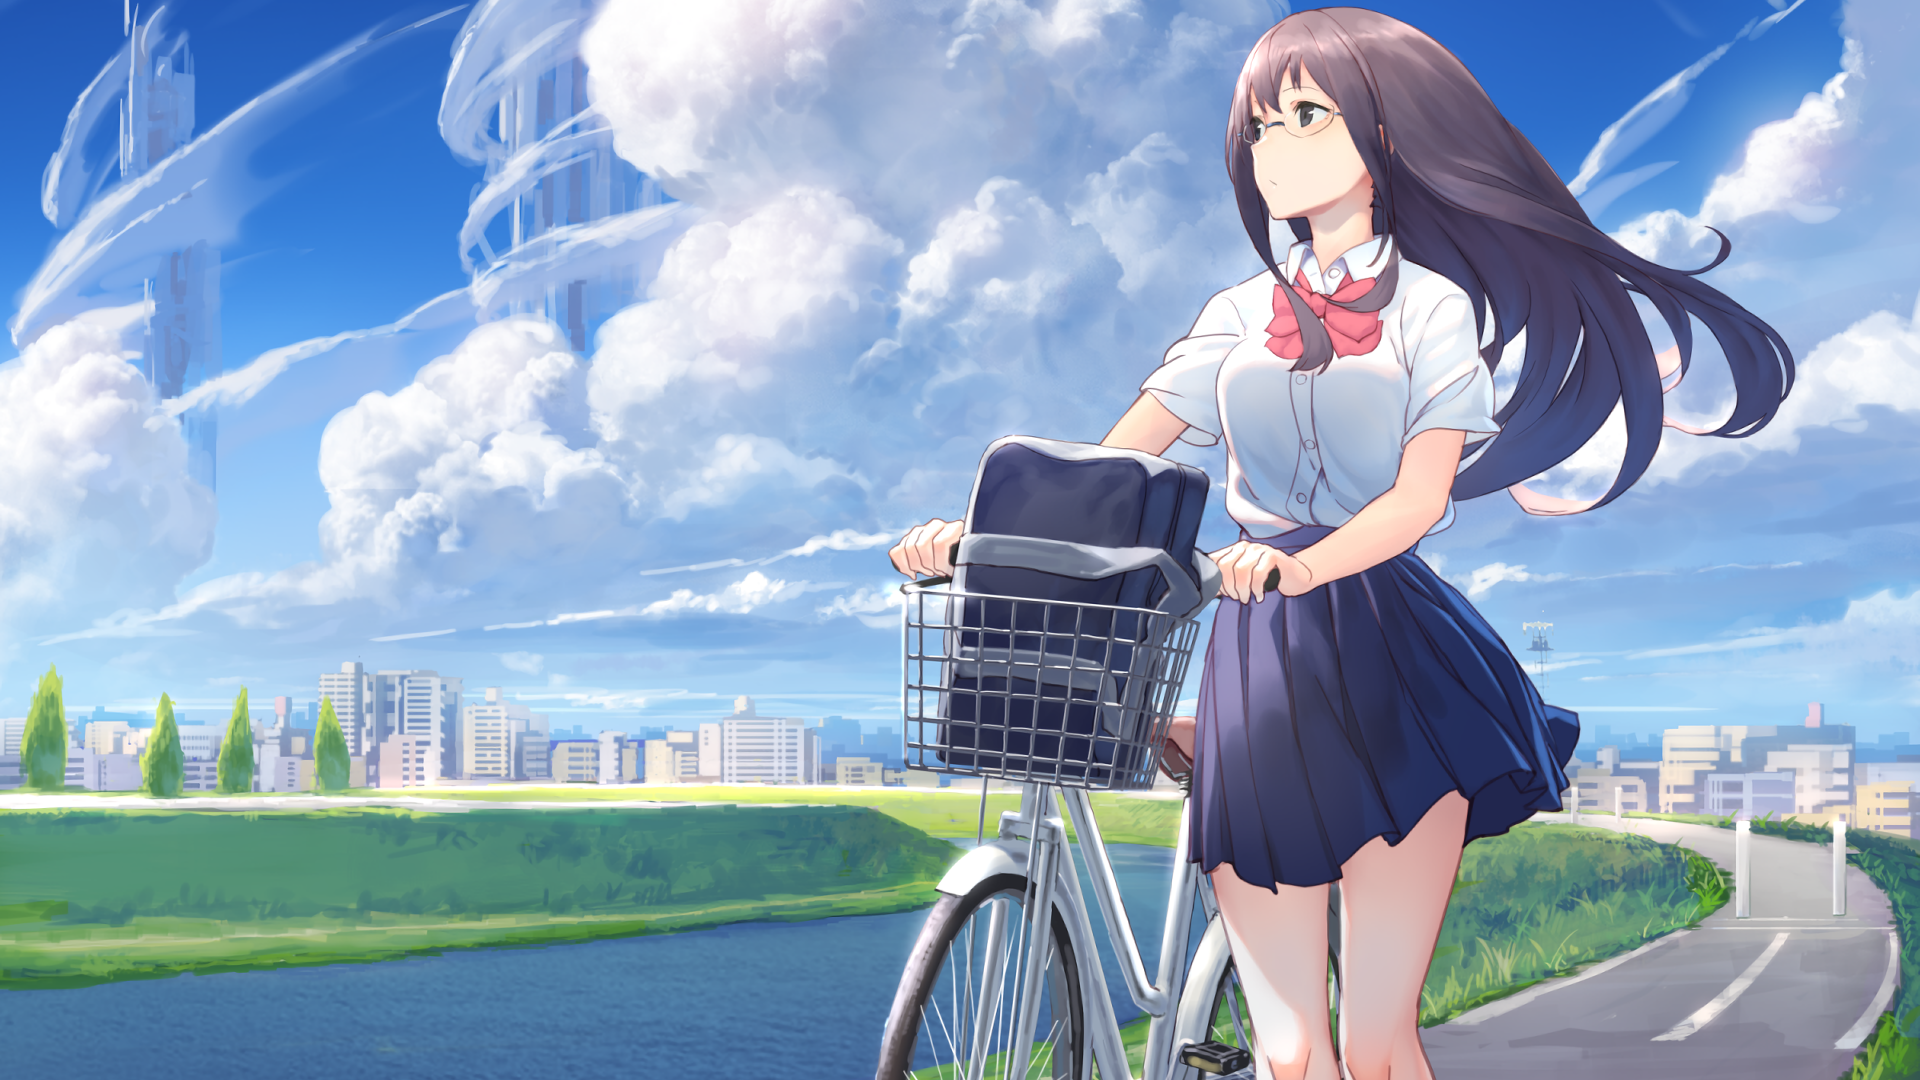 Anime 1920x1080 anime anime girls bicycle long hair sky clouds outdoors vehicle school uniform glasses cityscape Izumi Sai